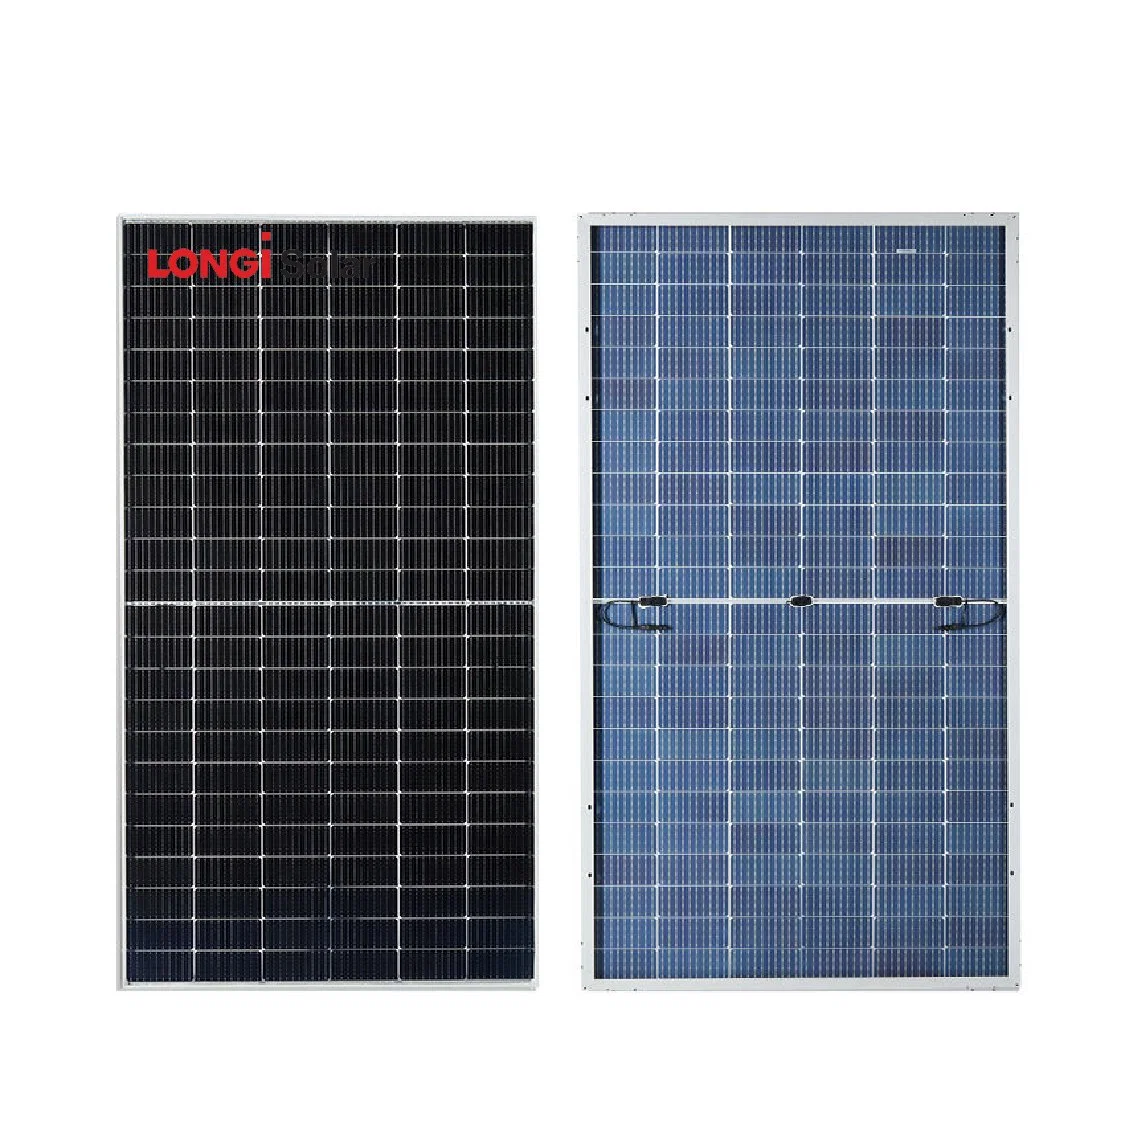 Longi солнечные панели адаптера PERC моно PV Bificial модуль 530W 535W 540W 545W 550W панель солнечной энергии с 25 лет гарантии